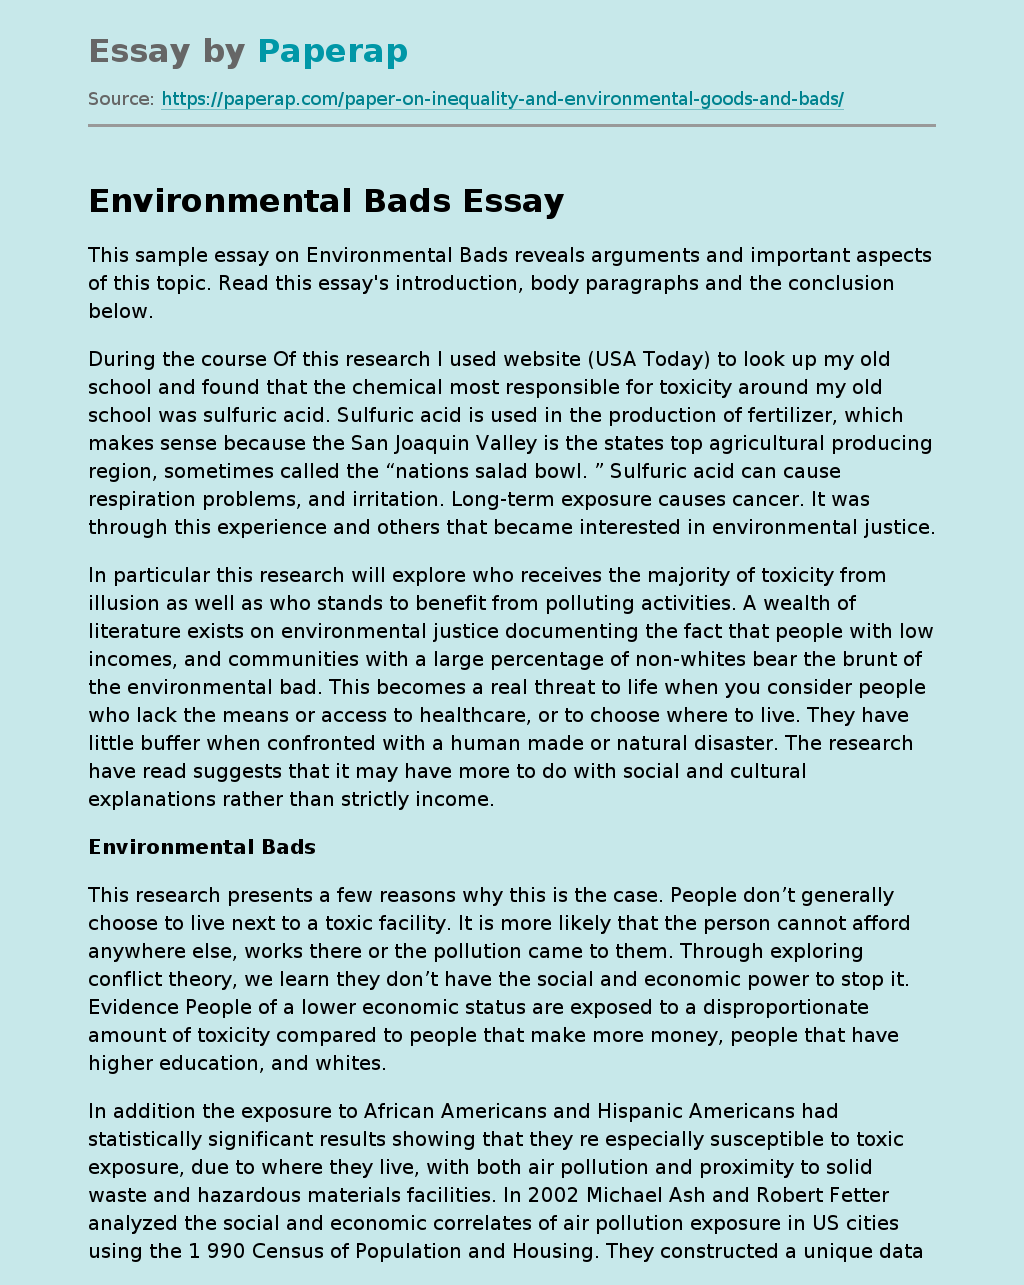 Environmental Bads